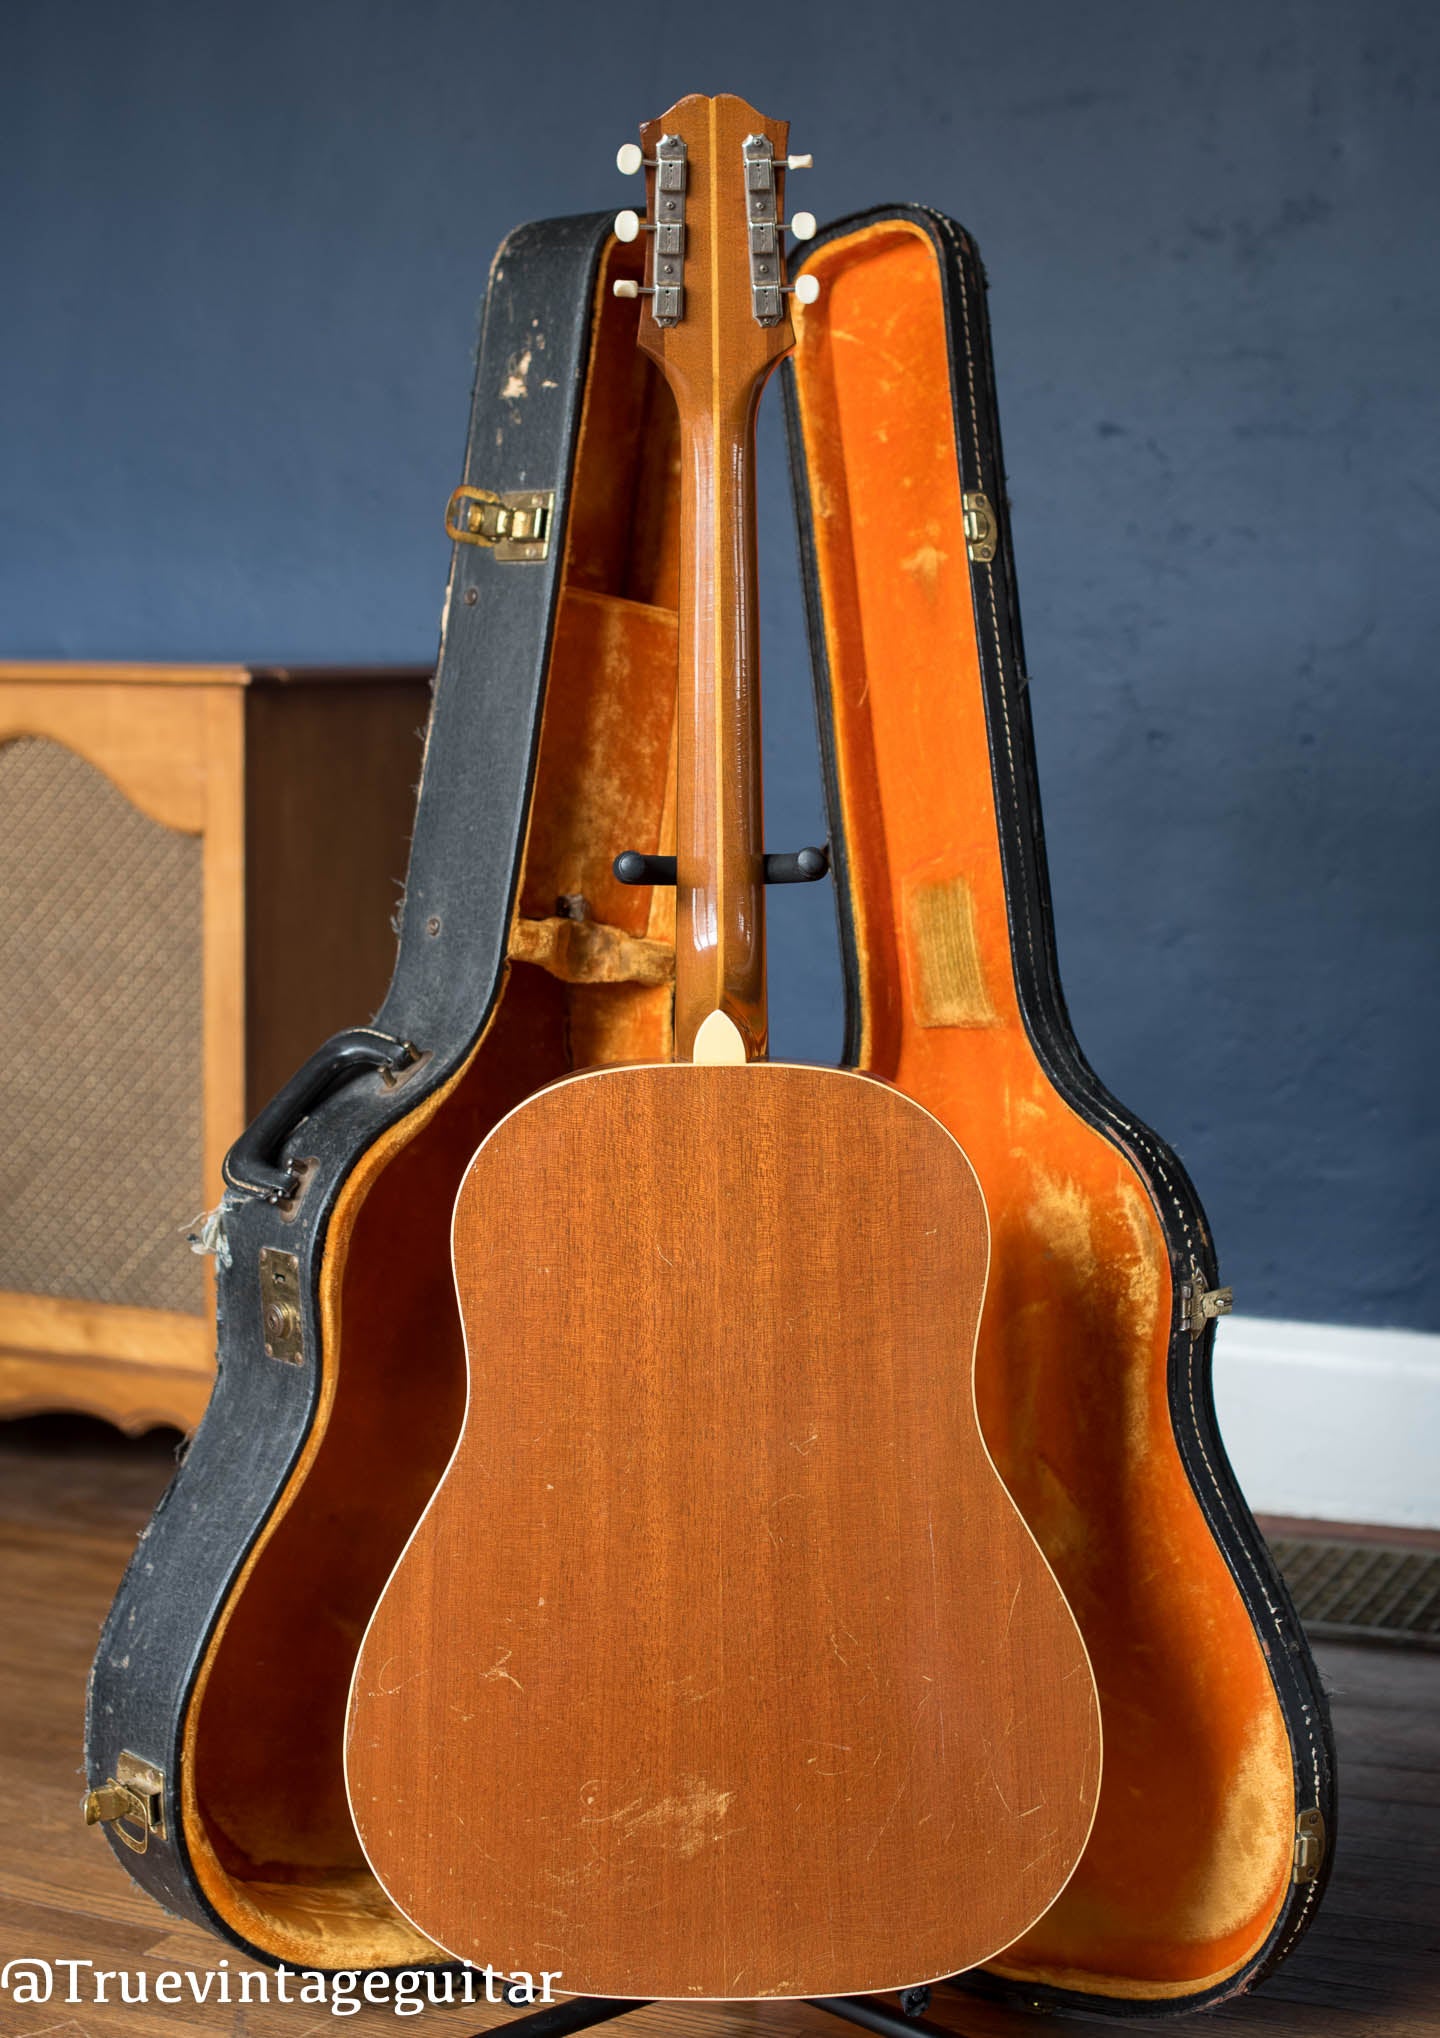 Vintage Epiphone acoustic guitar 1950s Texan Mahogany